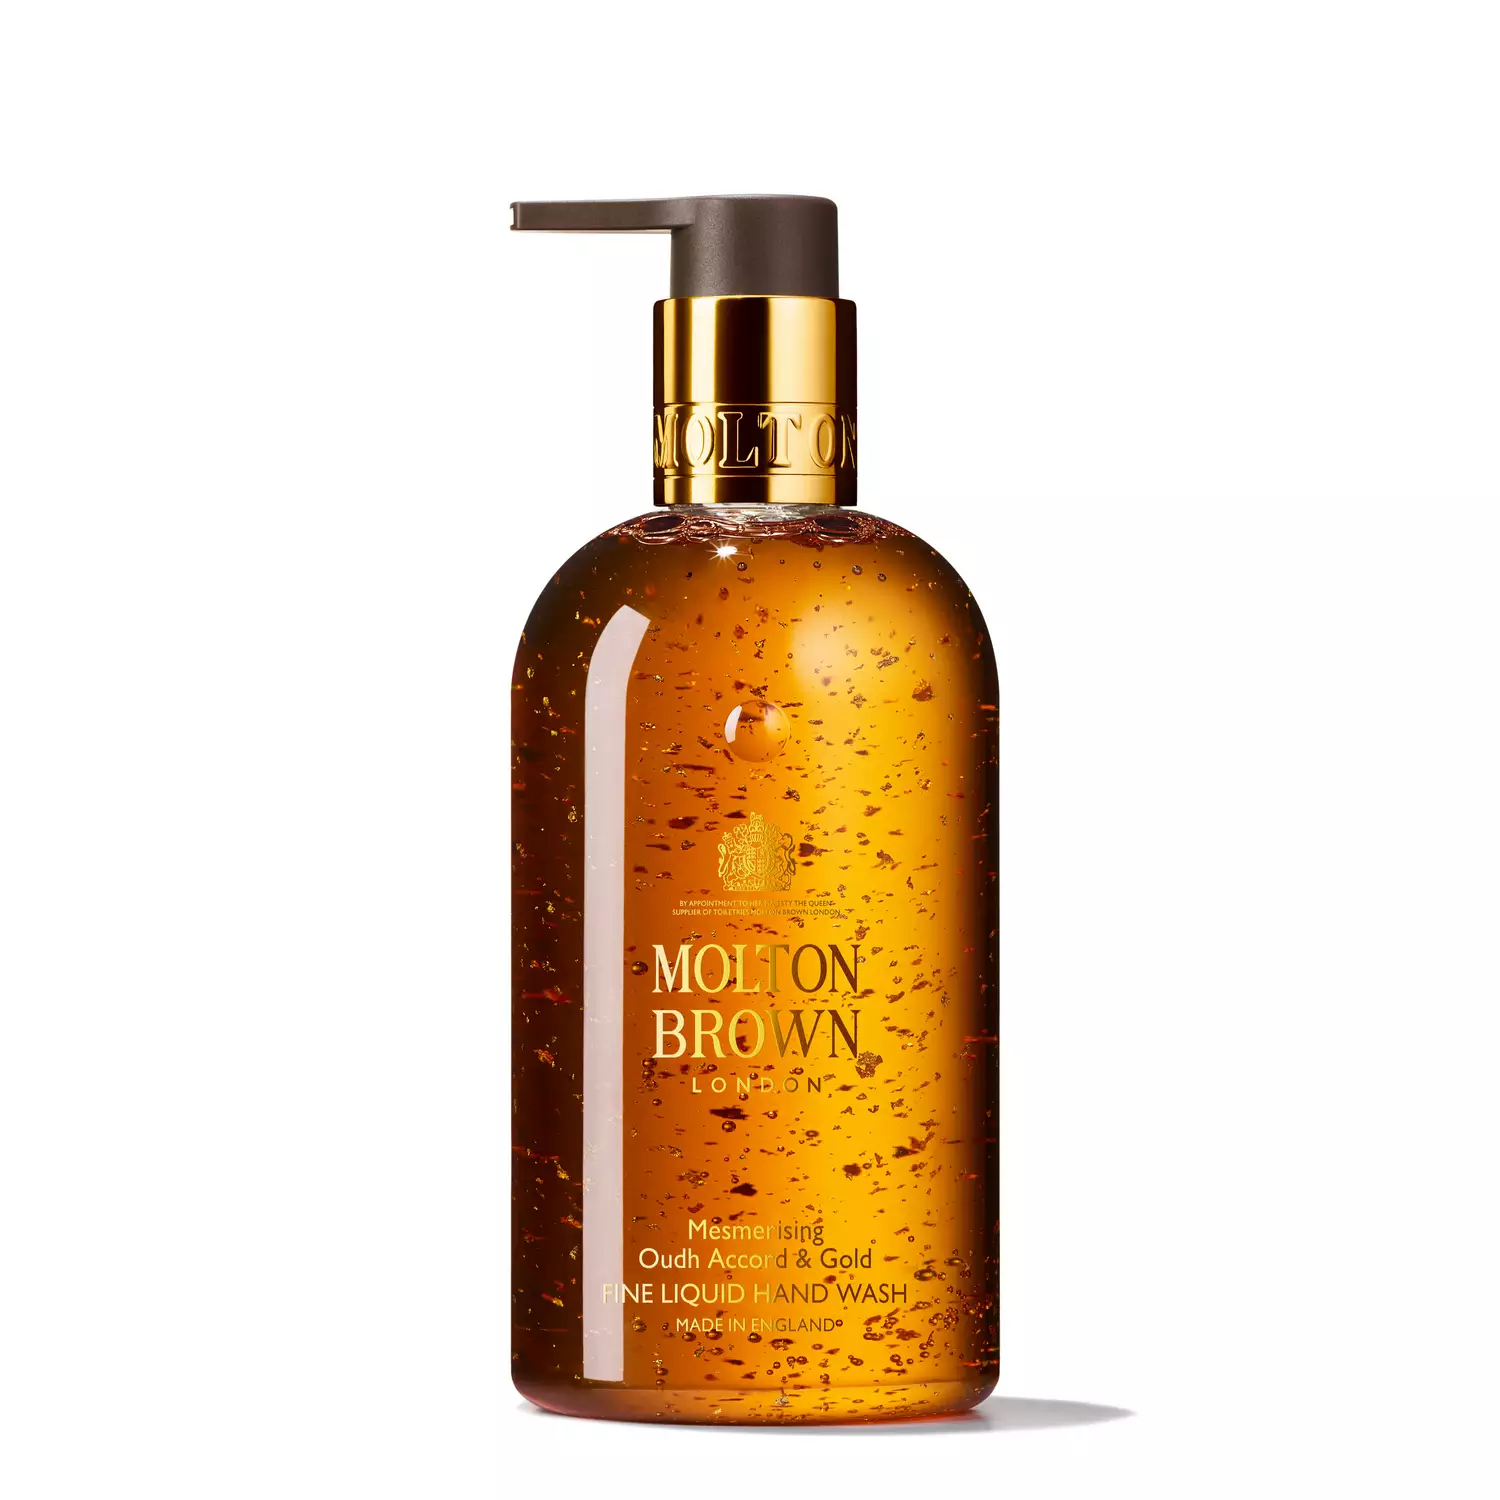 Molton Brown - Mesmerising Oudh Accord & Gold - Fine Liquid Hand Wash 